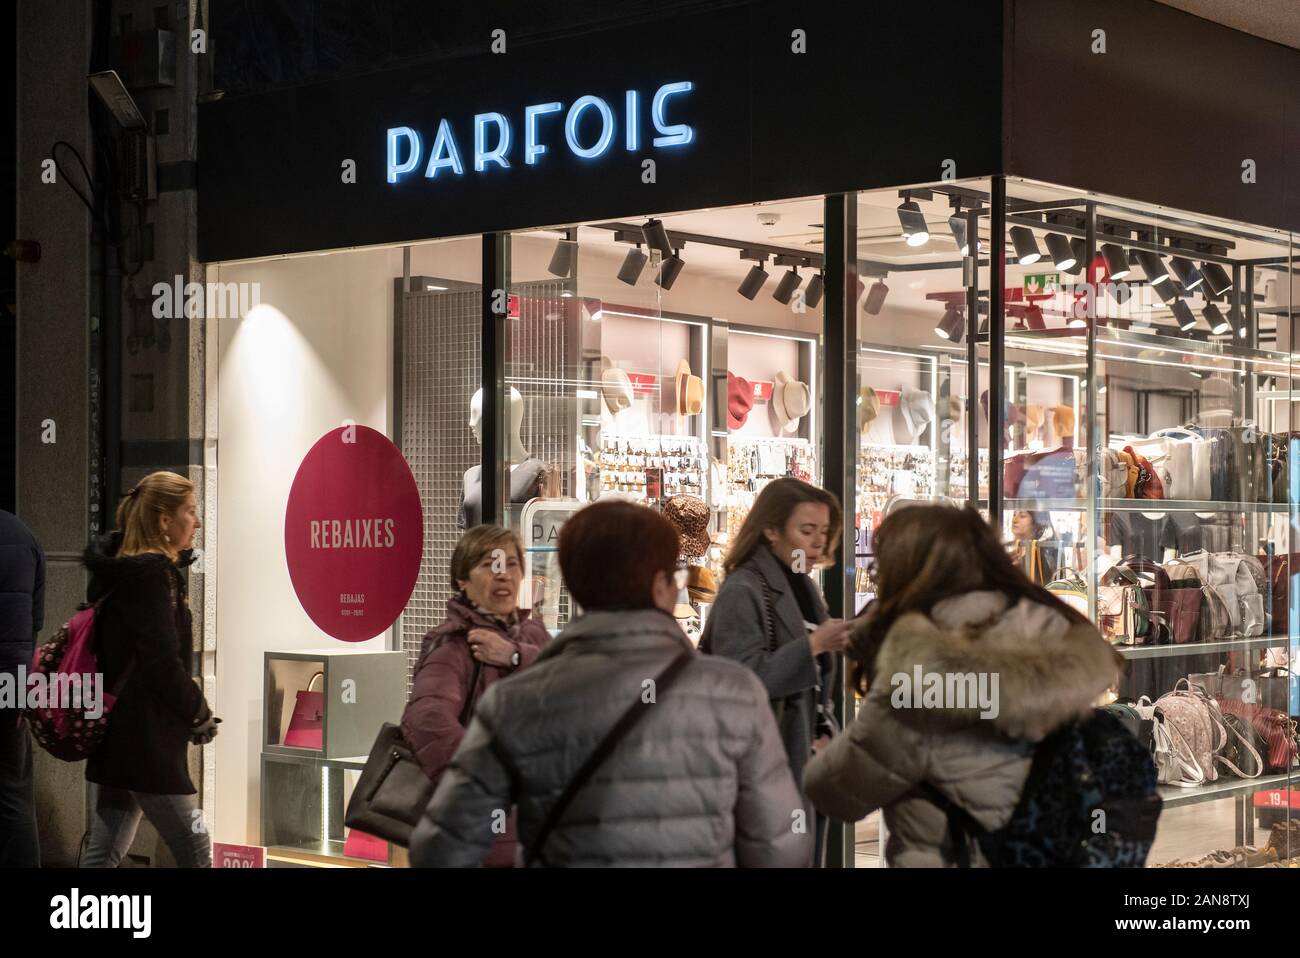 Portuguese women's accessories brand Parfois store seen in Spain Stock  Photo - Alamy